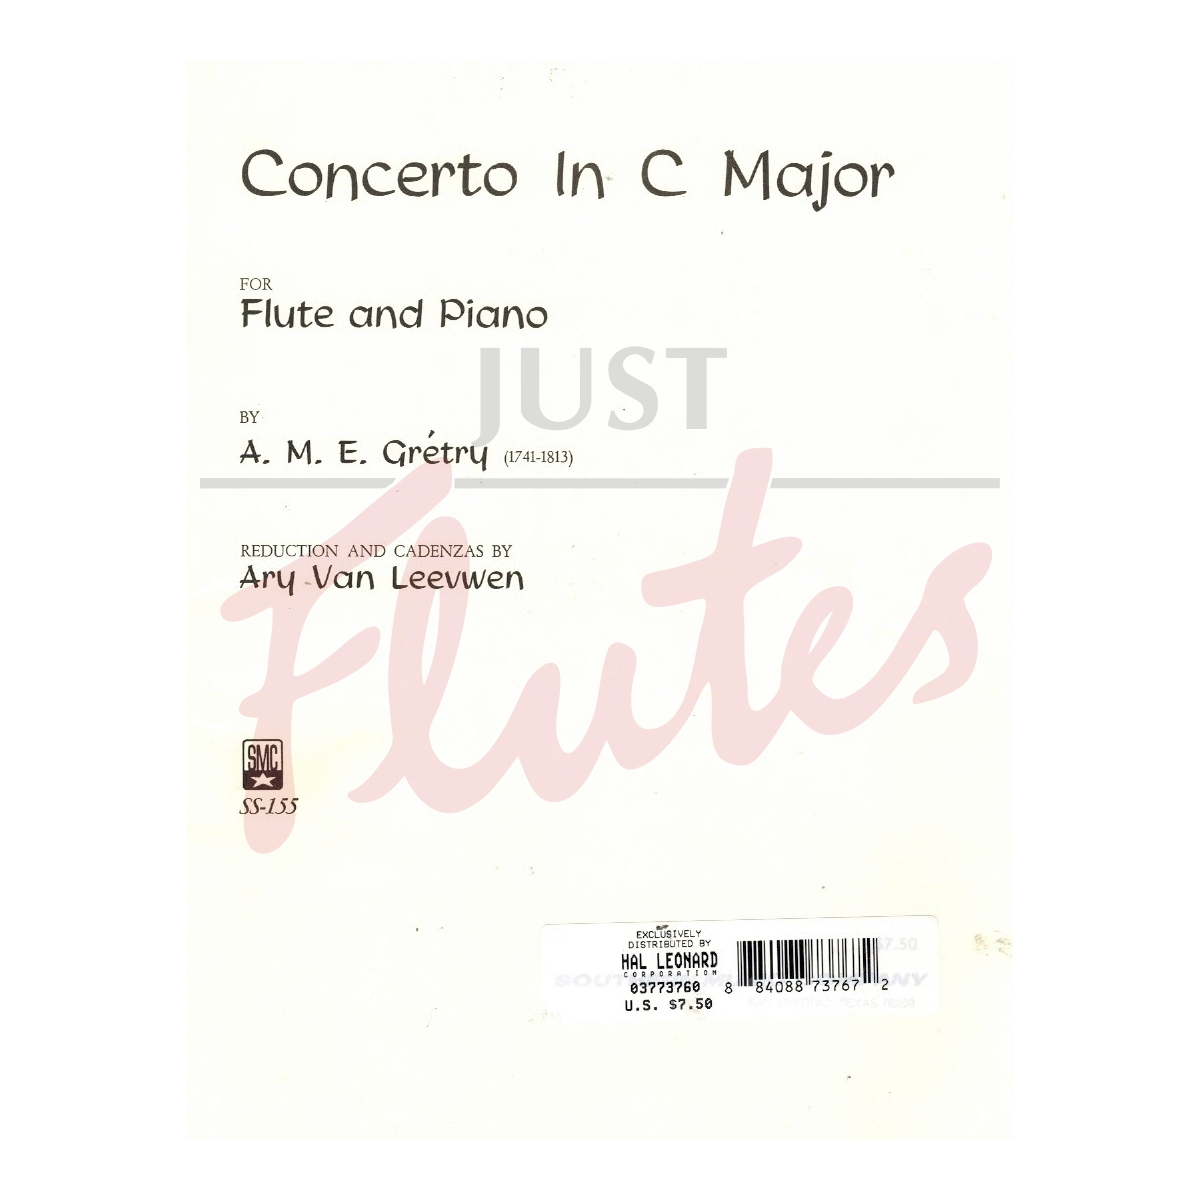 Flute Concerto in C major